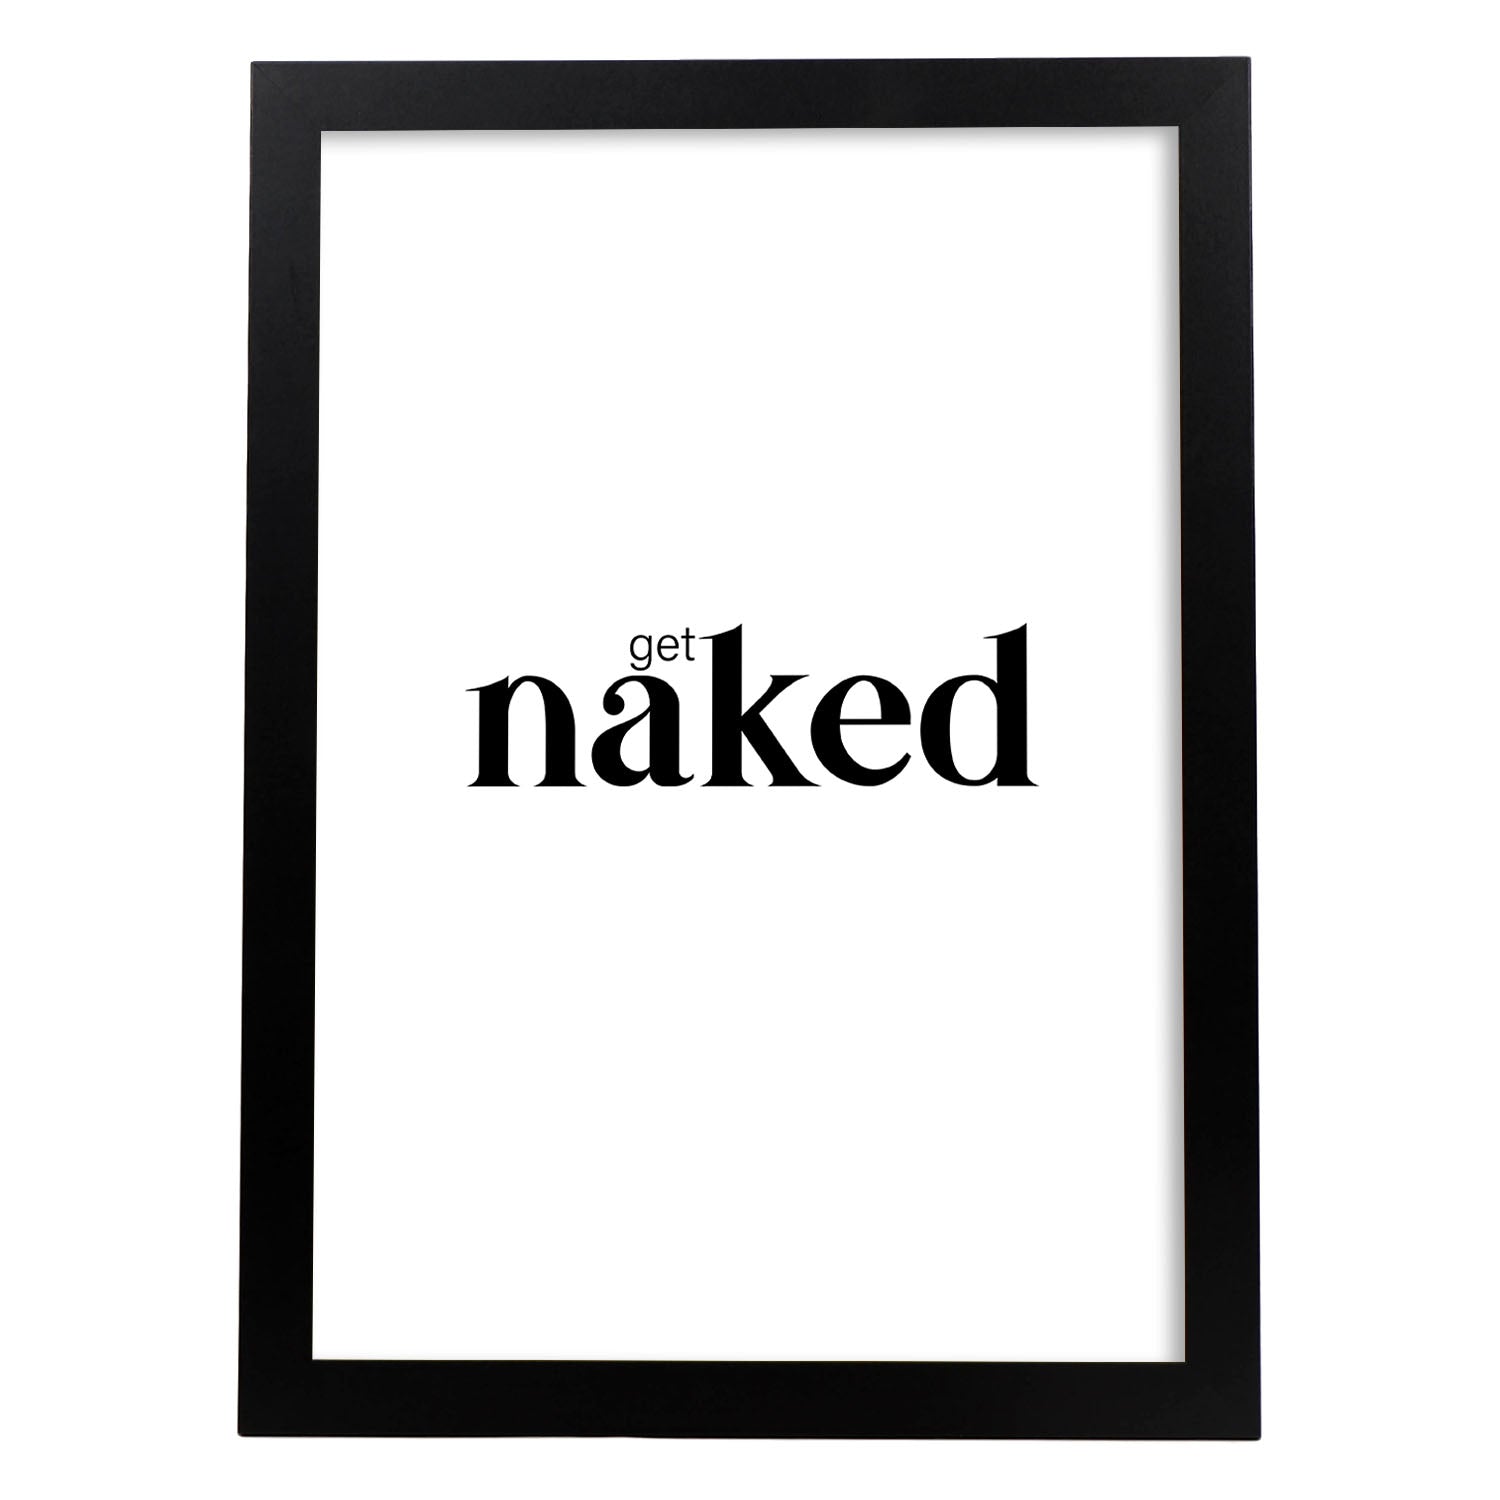 Lamina artistica decorativa con ilustración de get naked estilo Mensaje inspiracional-Artwork-Nacnic-A4-Marco Negro-Nacnic Estudio SL